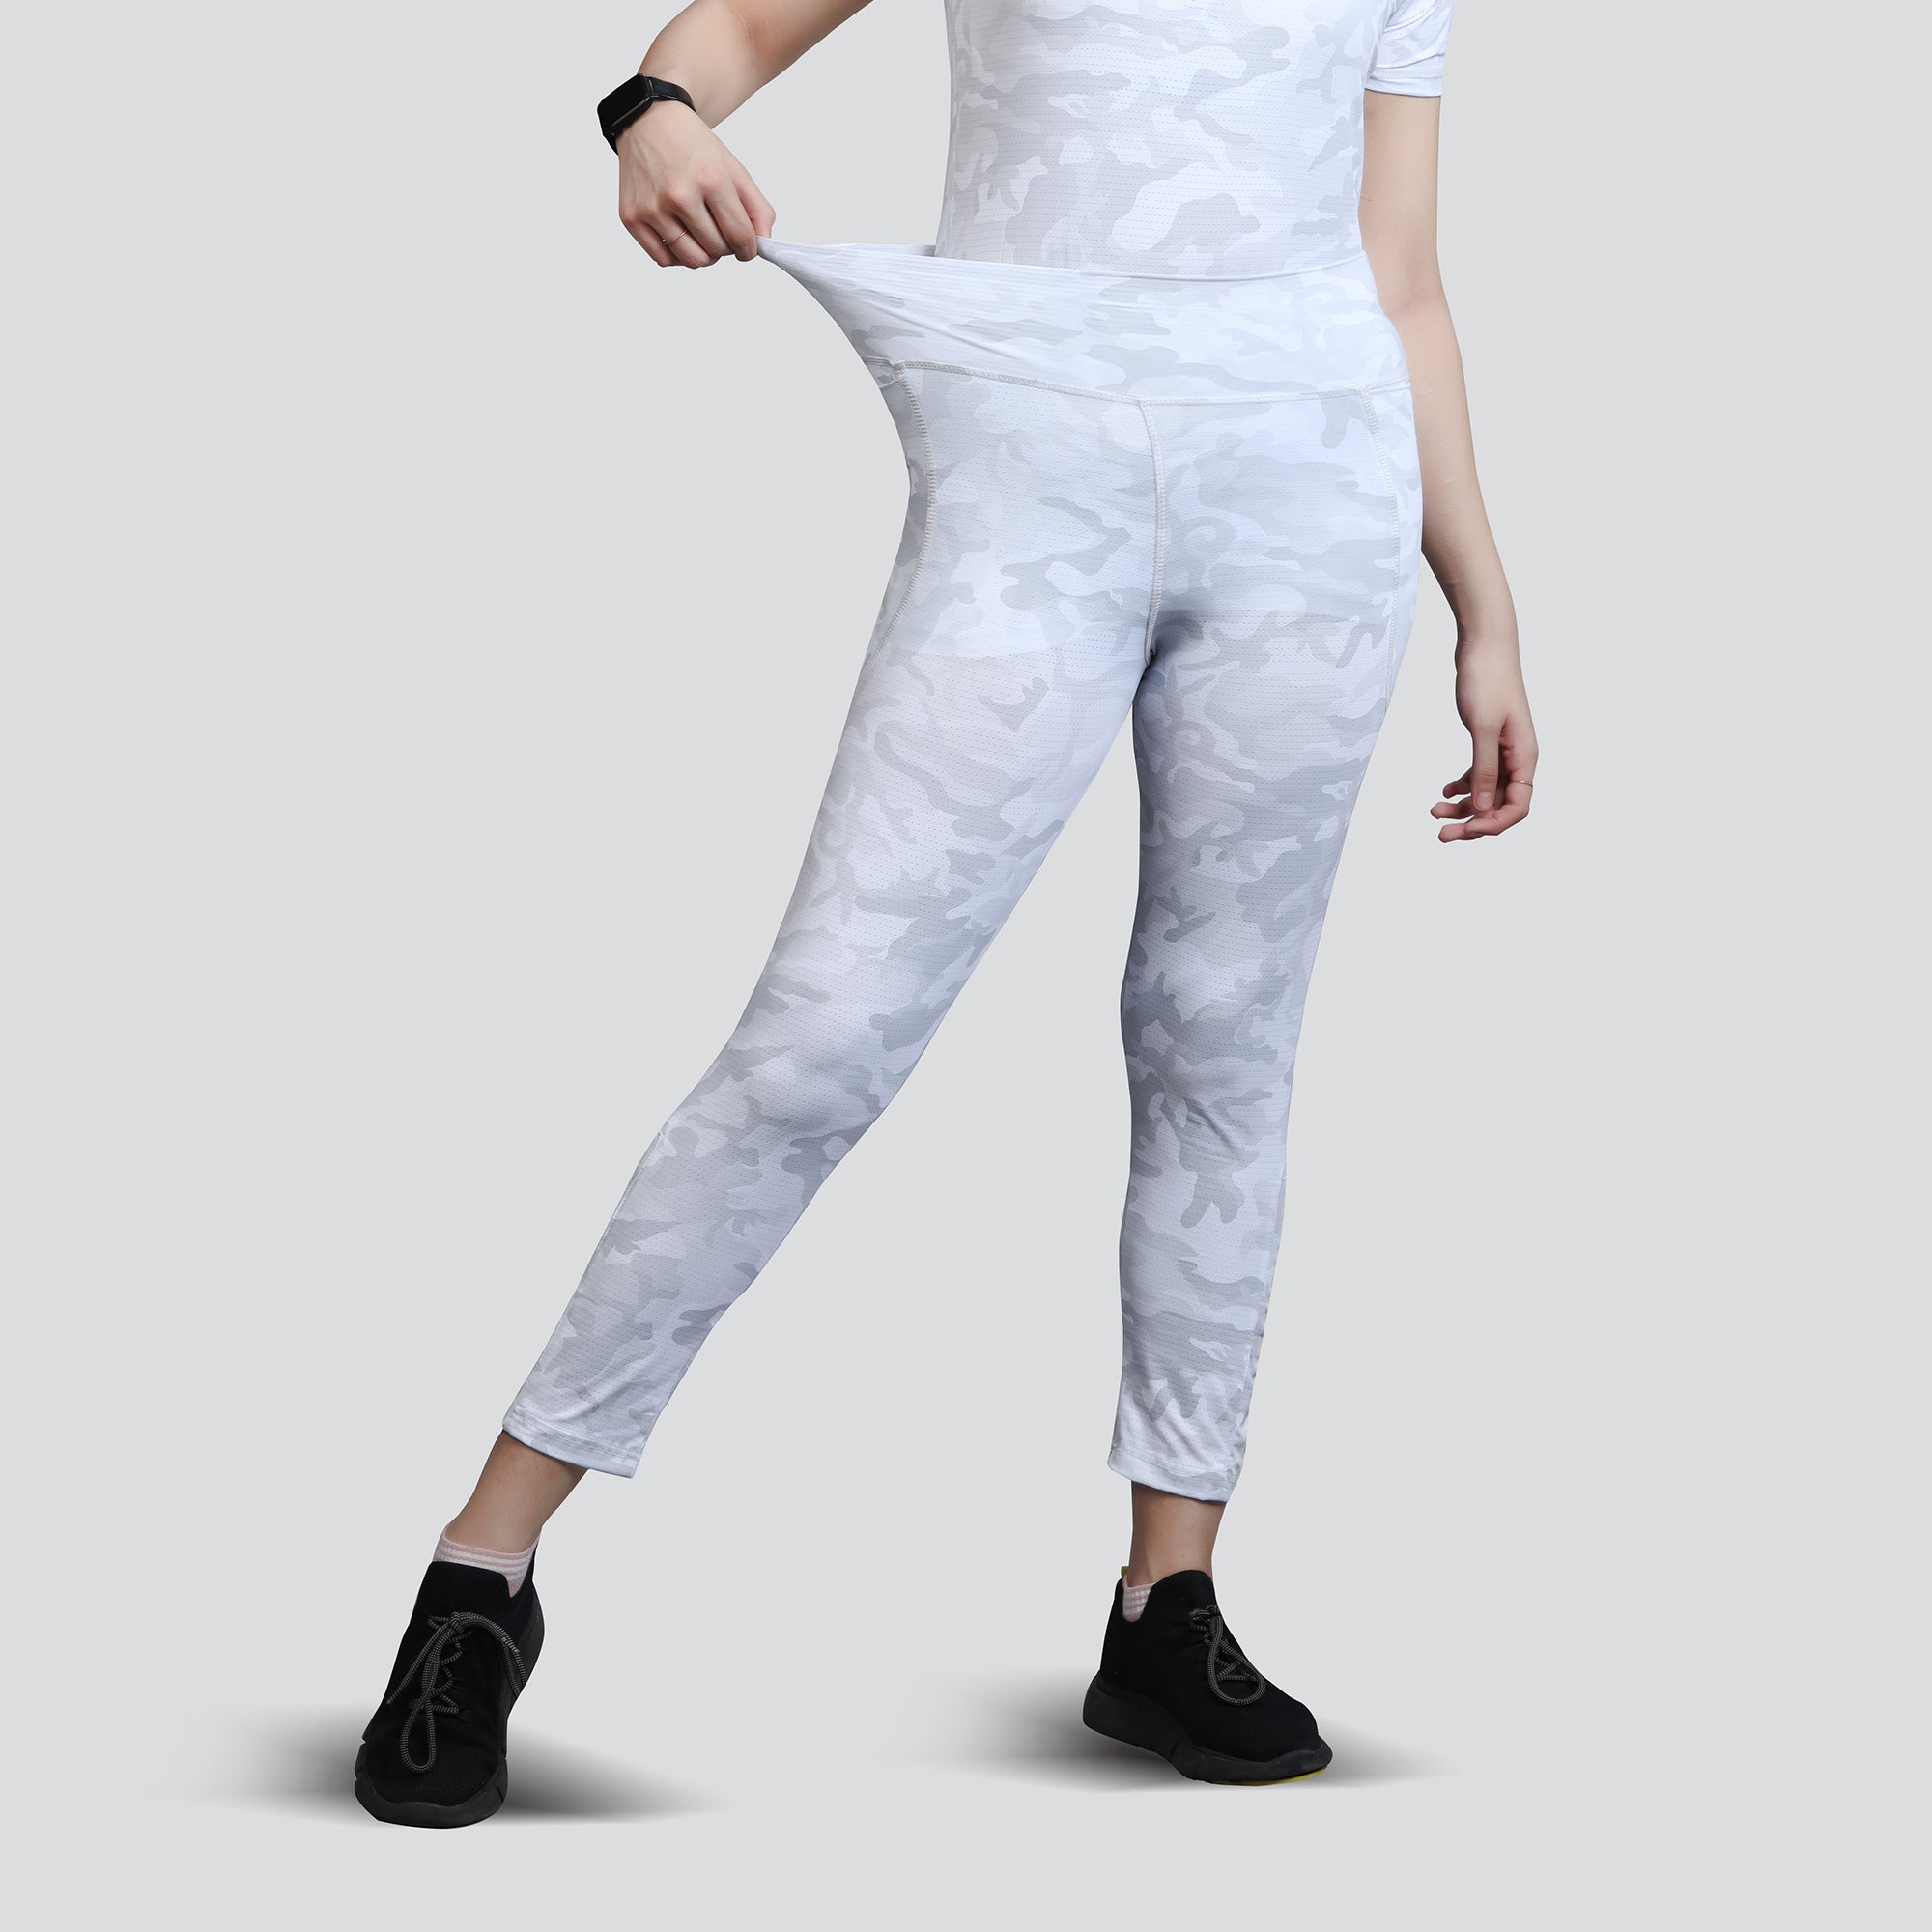 Women's Camo Workout Pants, High-Waisted Stretchable Yoga Leggings - White